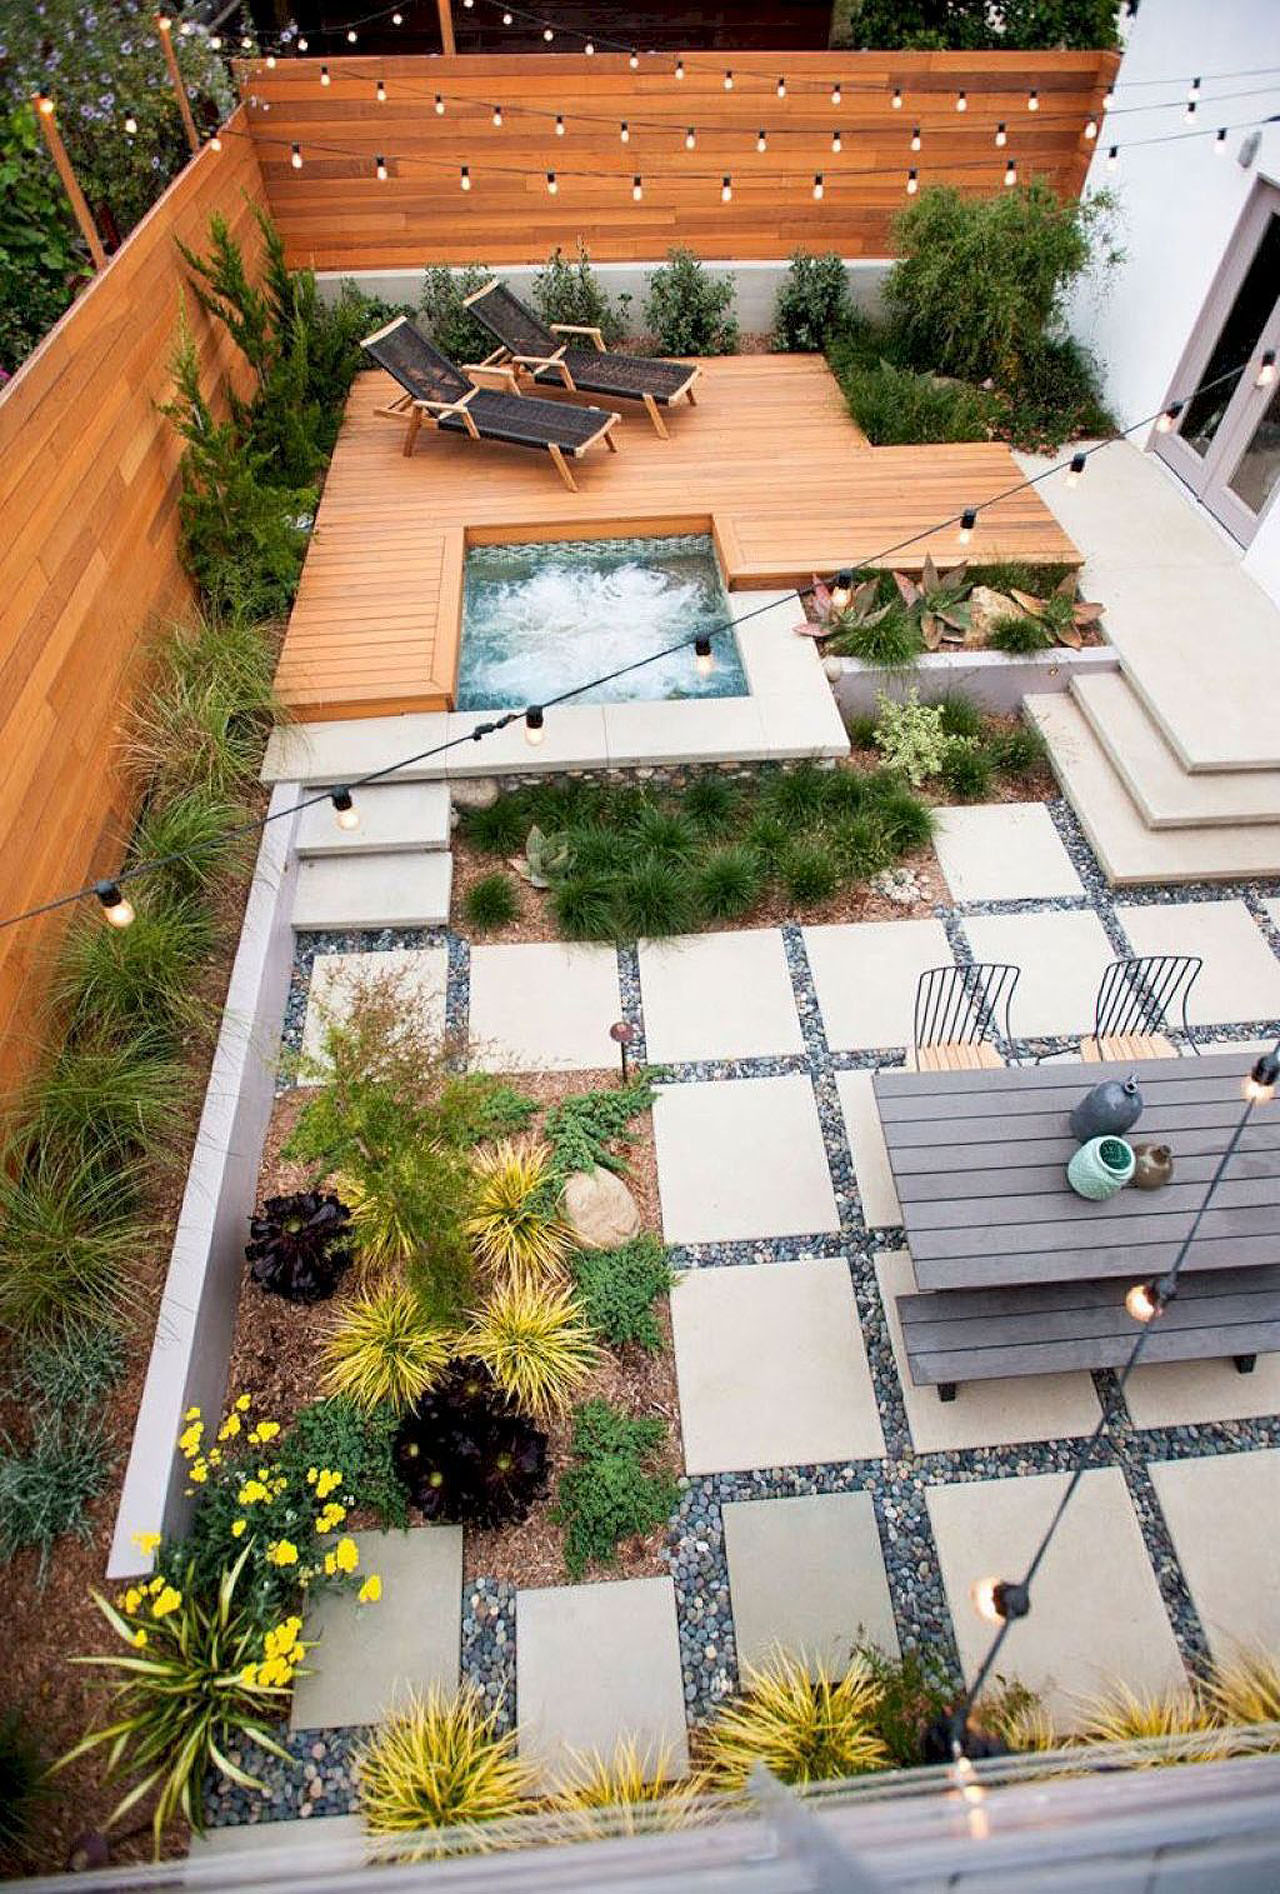 Modern-Backyard-Jacuzzi-Sun-Lounger-Dining-Planter-Paving-Steps